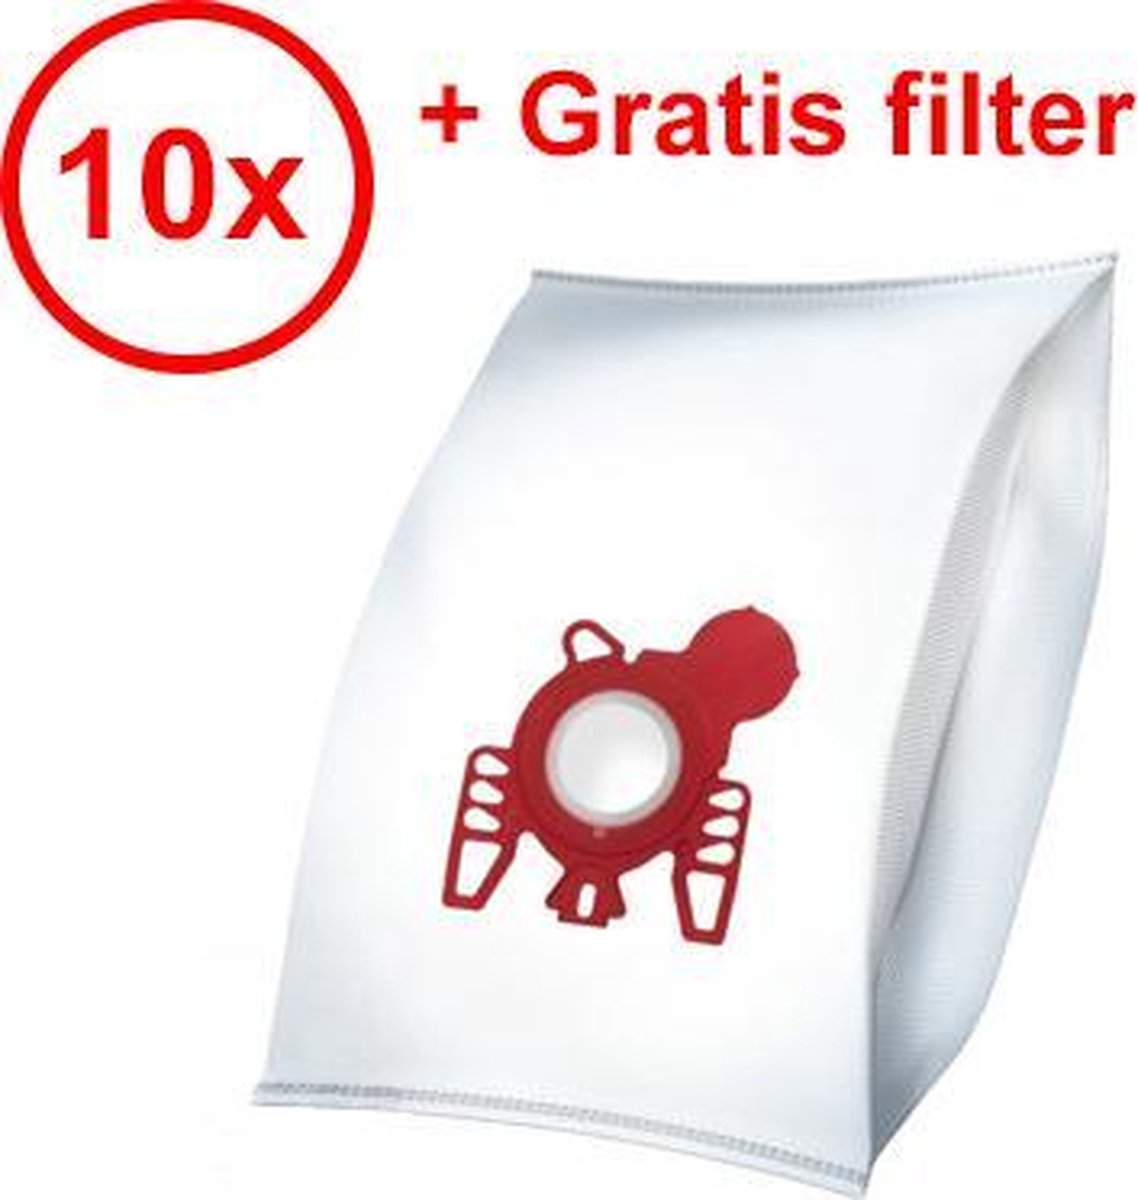 Miele FJM filterplus 3-D stofzuigerzak (10 stuks + gratis filter) High performance Huismerk